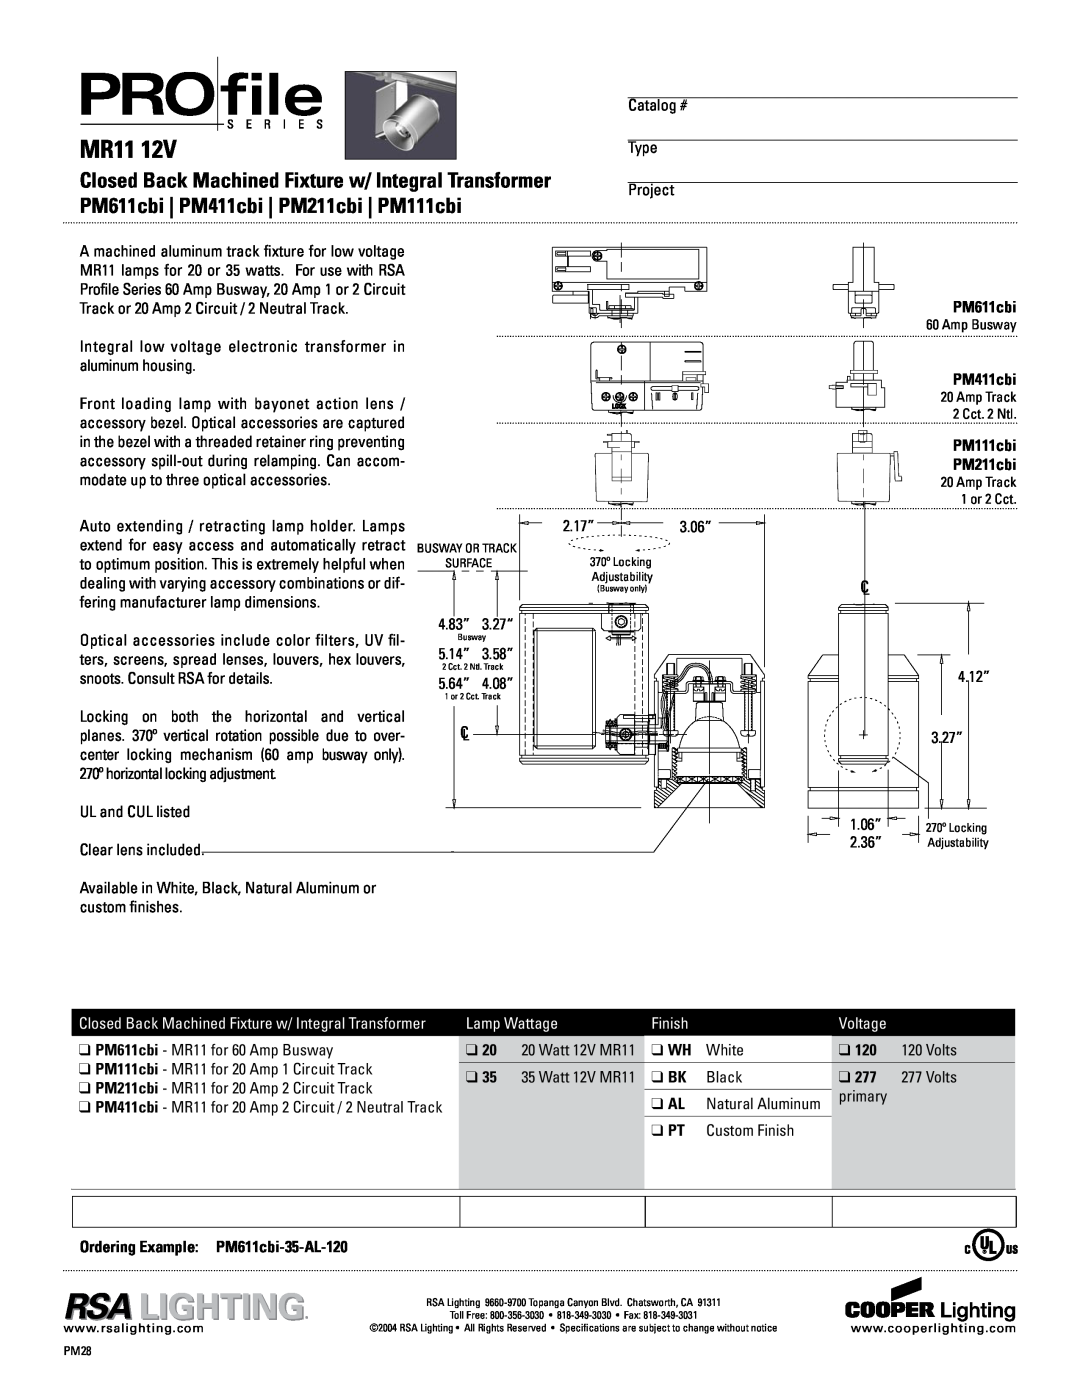 Cooper Lighting PM411cbi, PM611cbi, PM211cbi, PM111cbi specifications MR11, Lamp Wattage, Finish, Voltage 